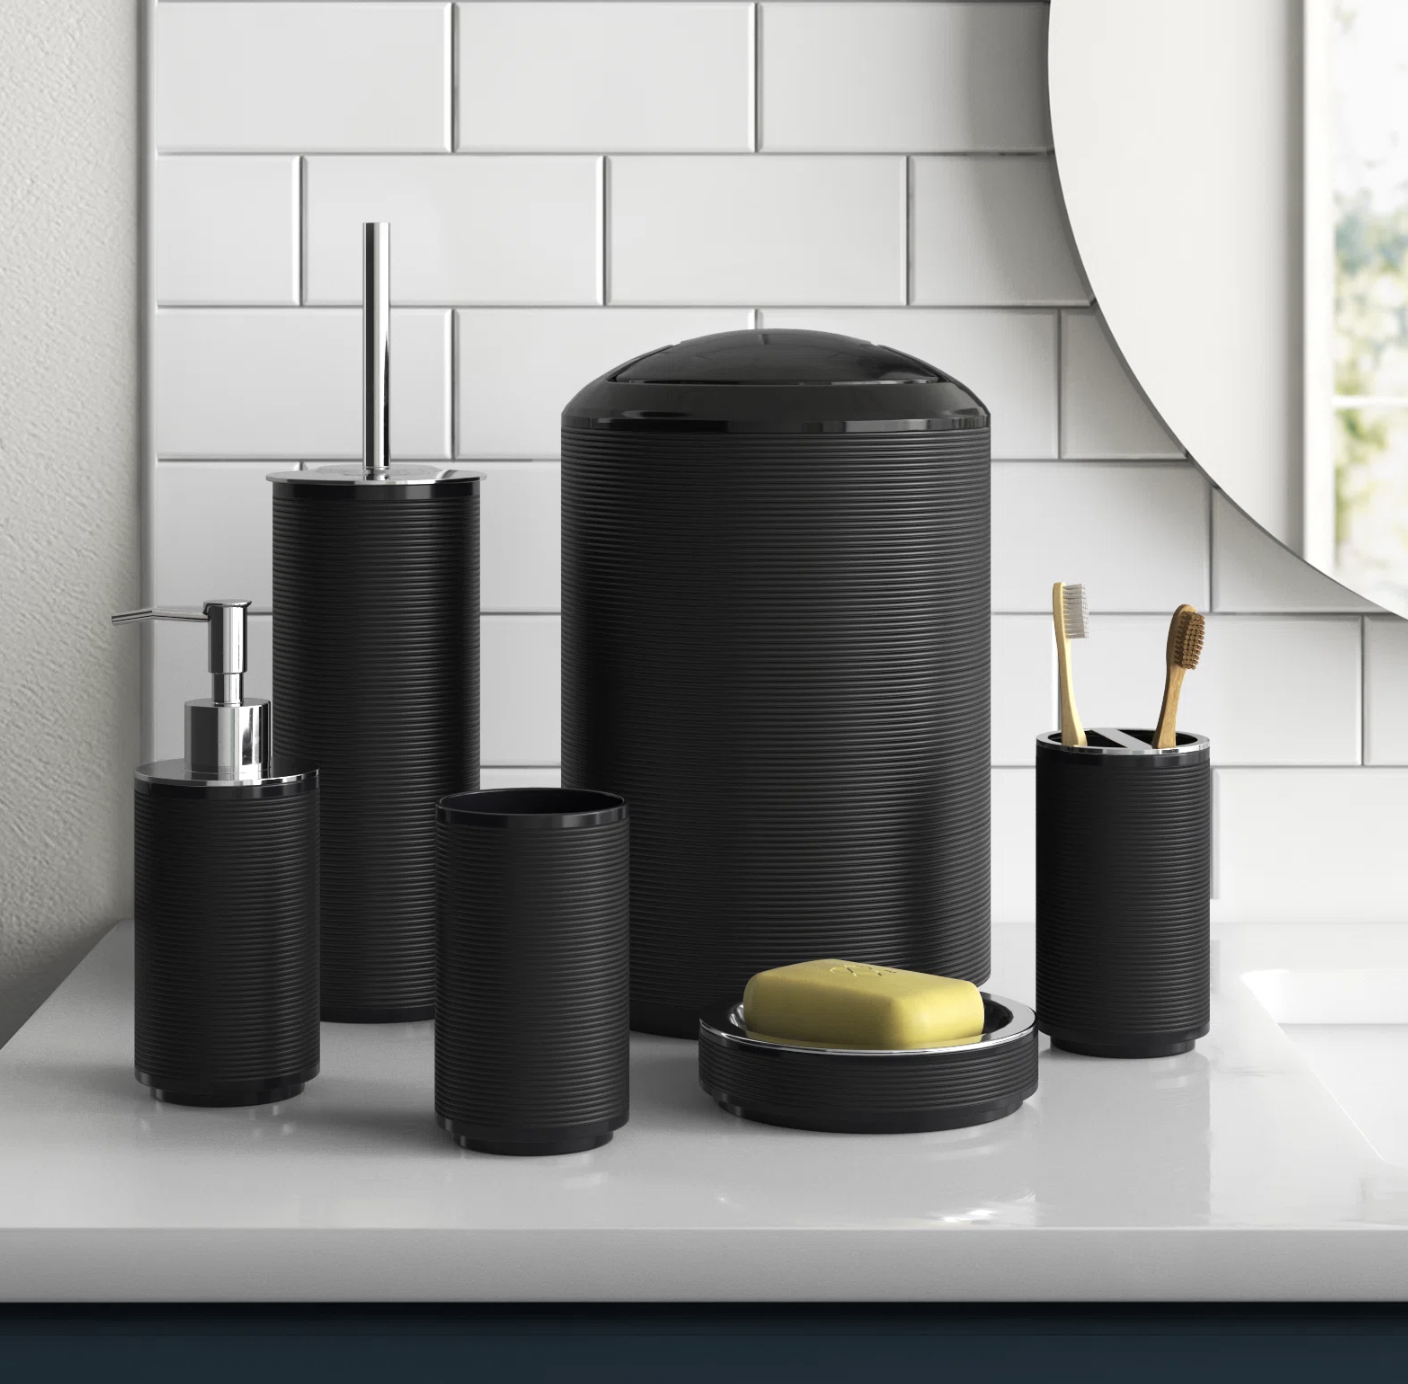 A six piece bathroom accessory set in black